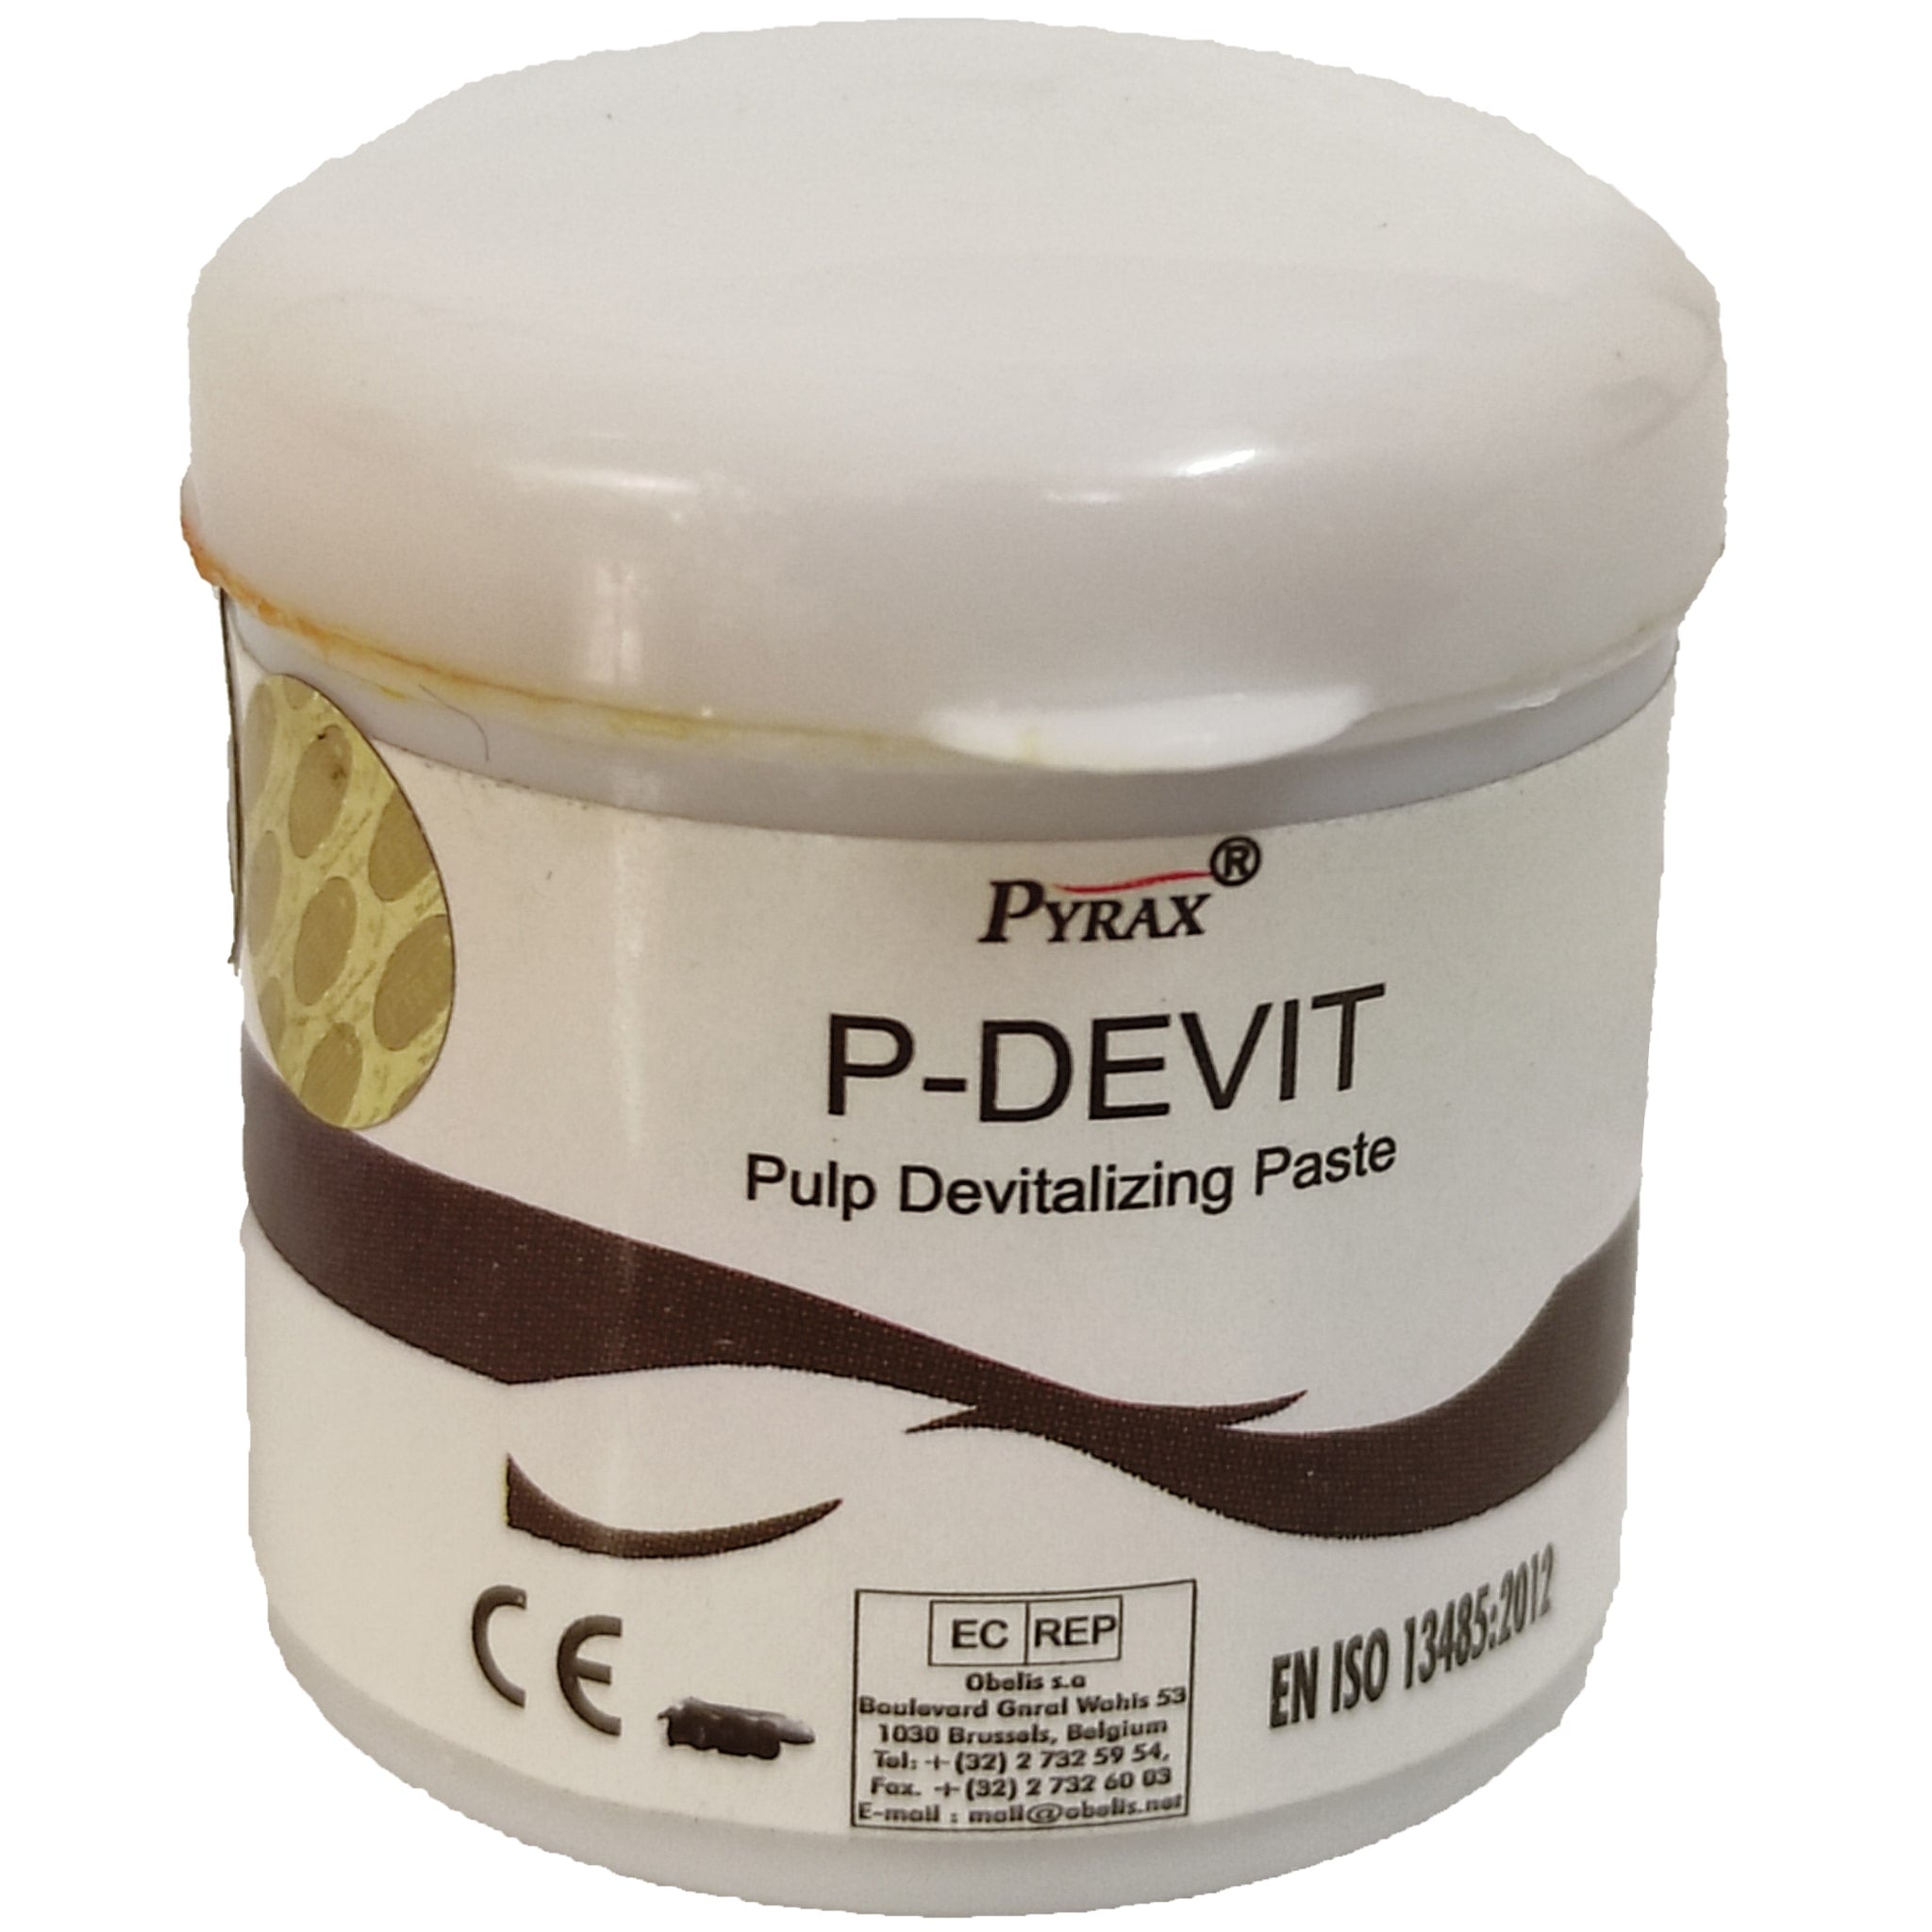 Pyrax P-Devit (Pulp Devitalizing Paste)